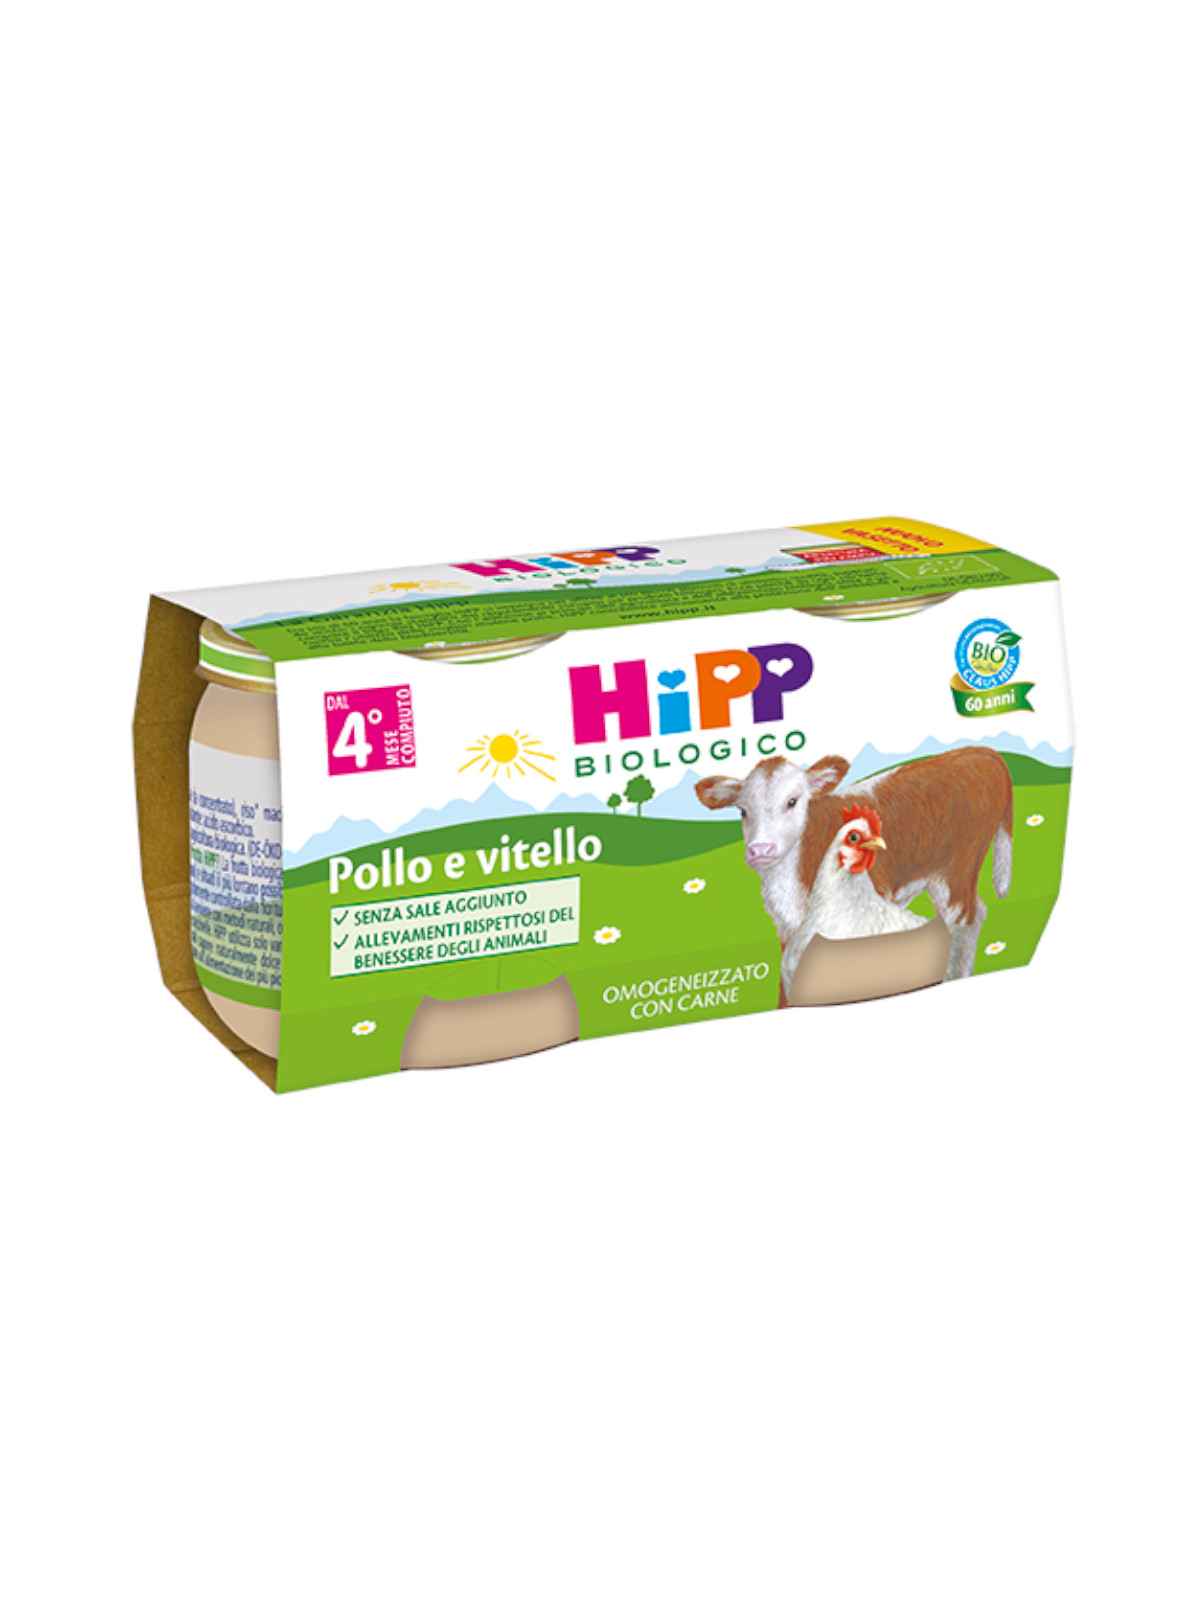 Hipp - omogeneizzato pollo e vitello 2x80g - Hipp